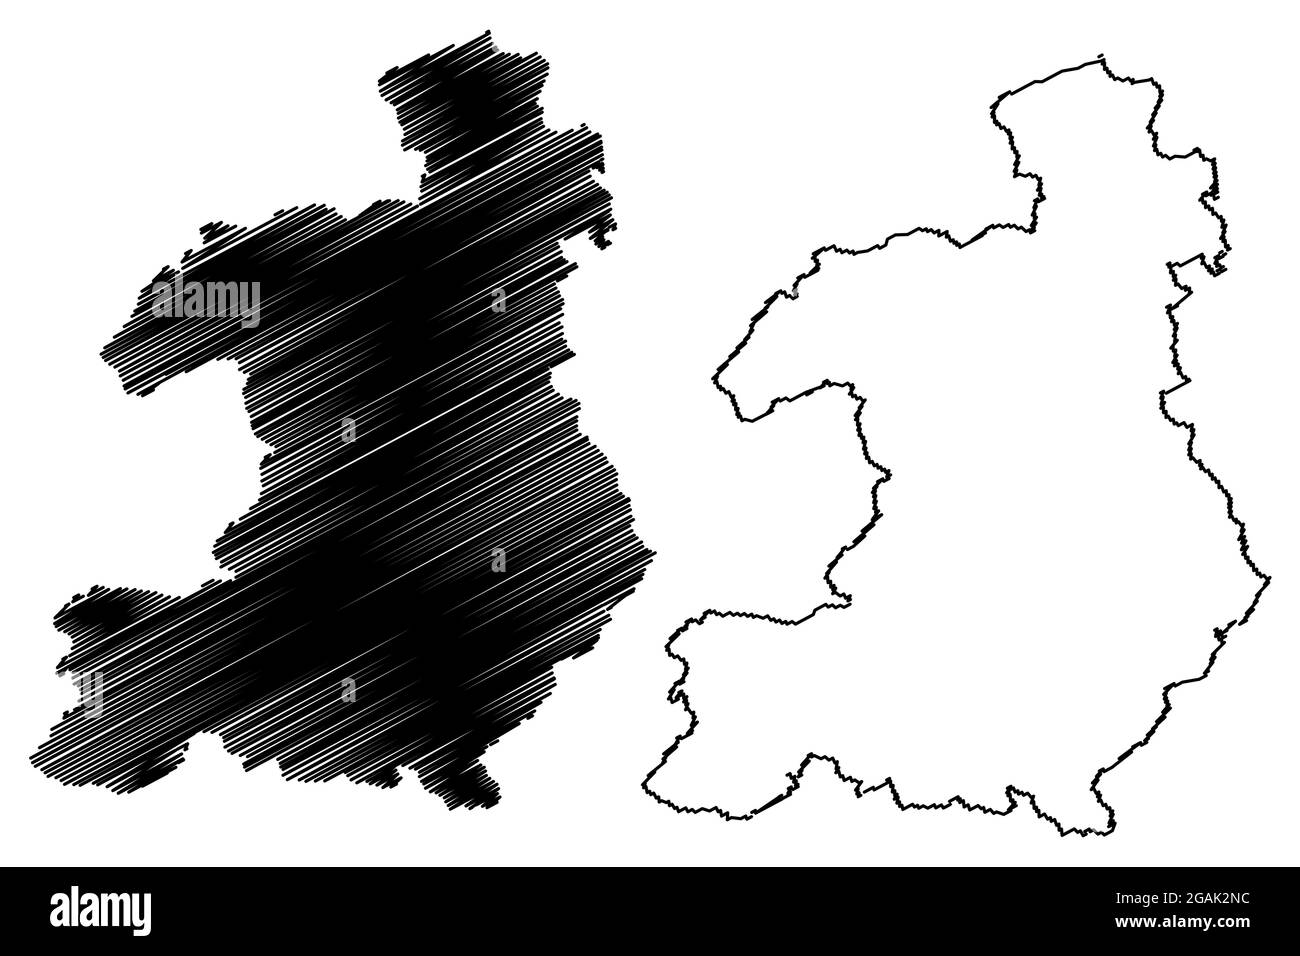 Distretto di Waldeck-Frankenberg (Repubblica federale di Germania, distretto rurale regione di Kassel, stato di Assia, Assia, Assia) illustrazione vettoriale mappa, scri Illustrazione Vettoriale